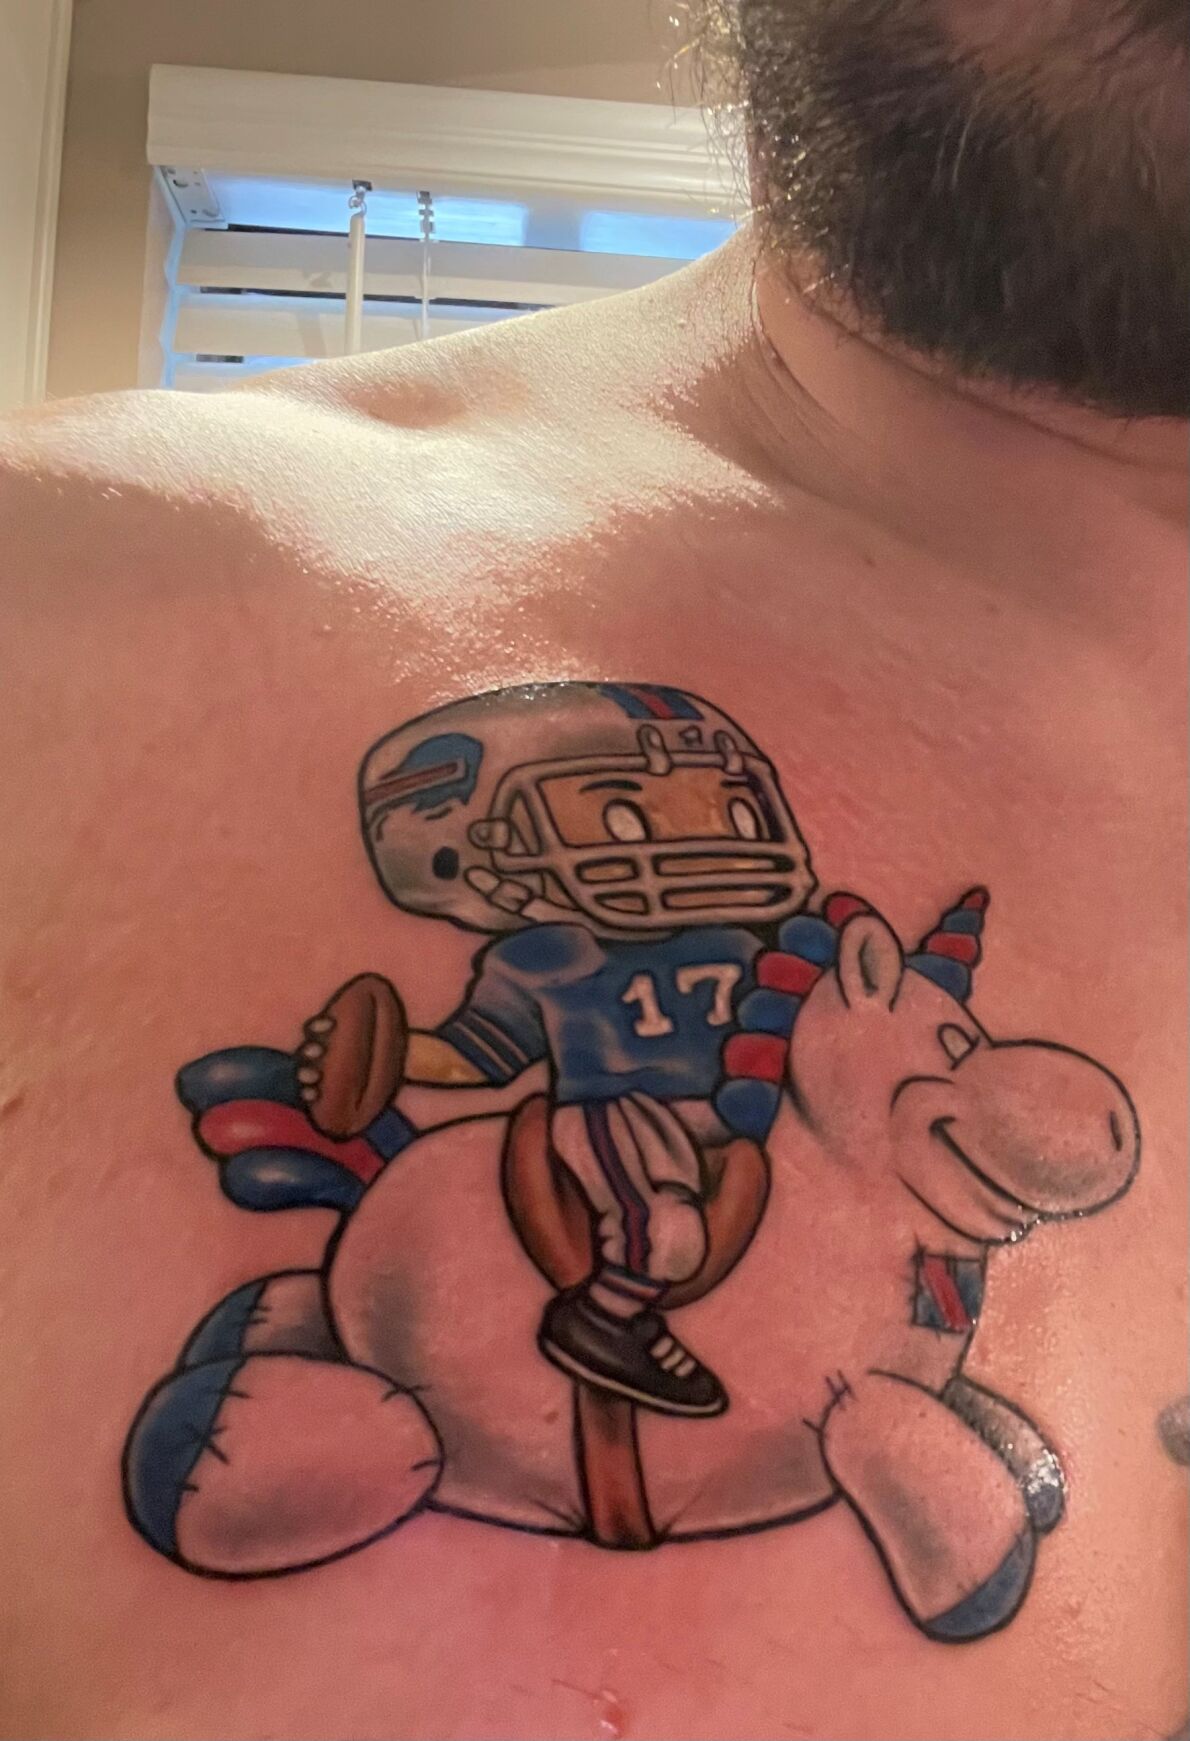 Tattoo the Process Buffalo Bills fan gets tattoo to celebrate end of  playoff drought  newyorkupstatecom